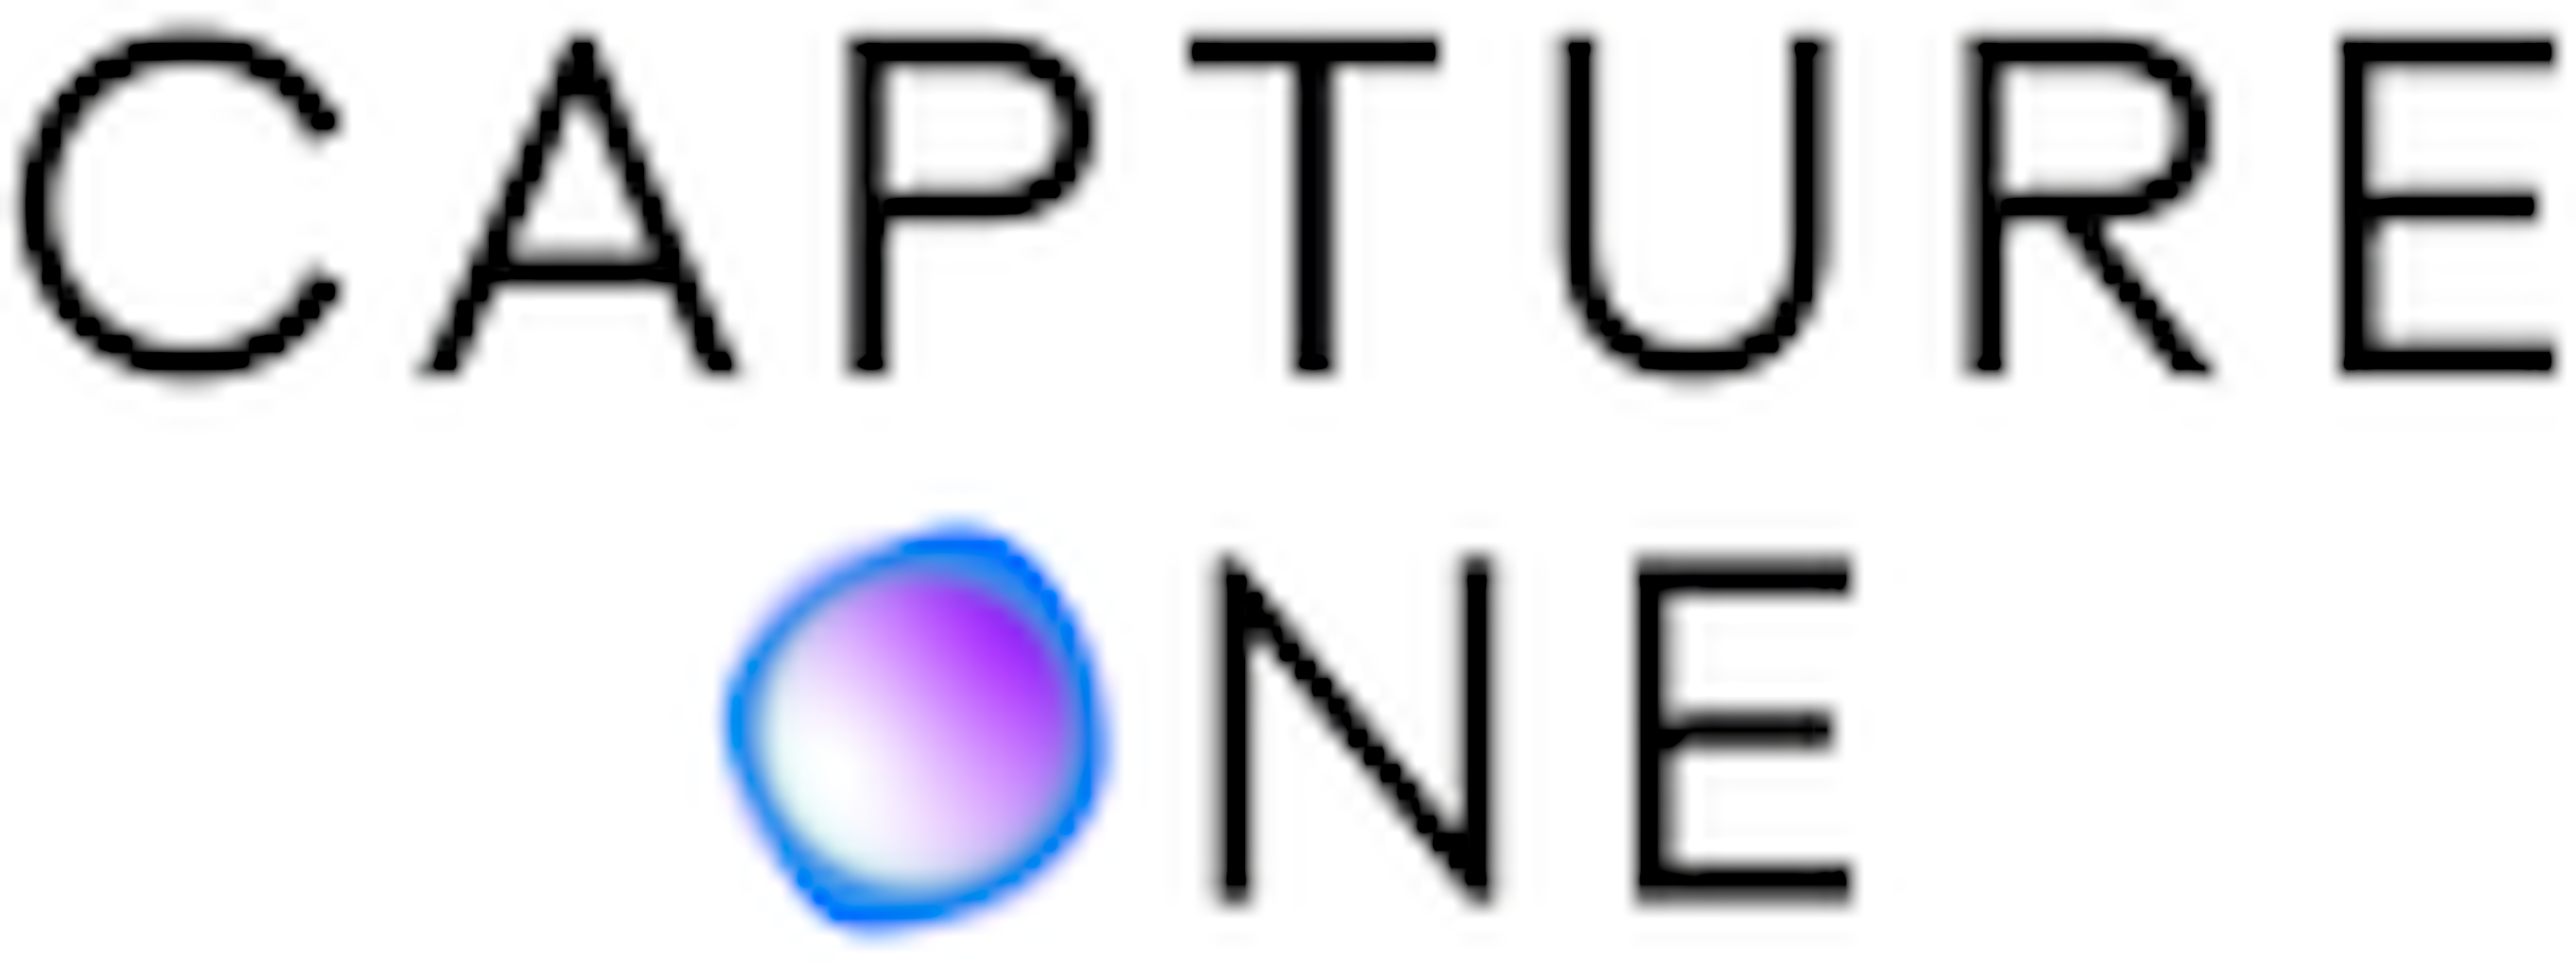 Capture One Logo